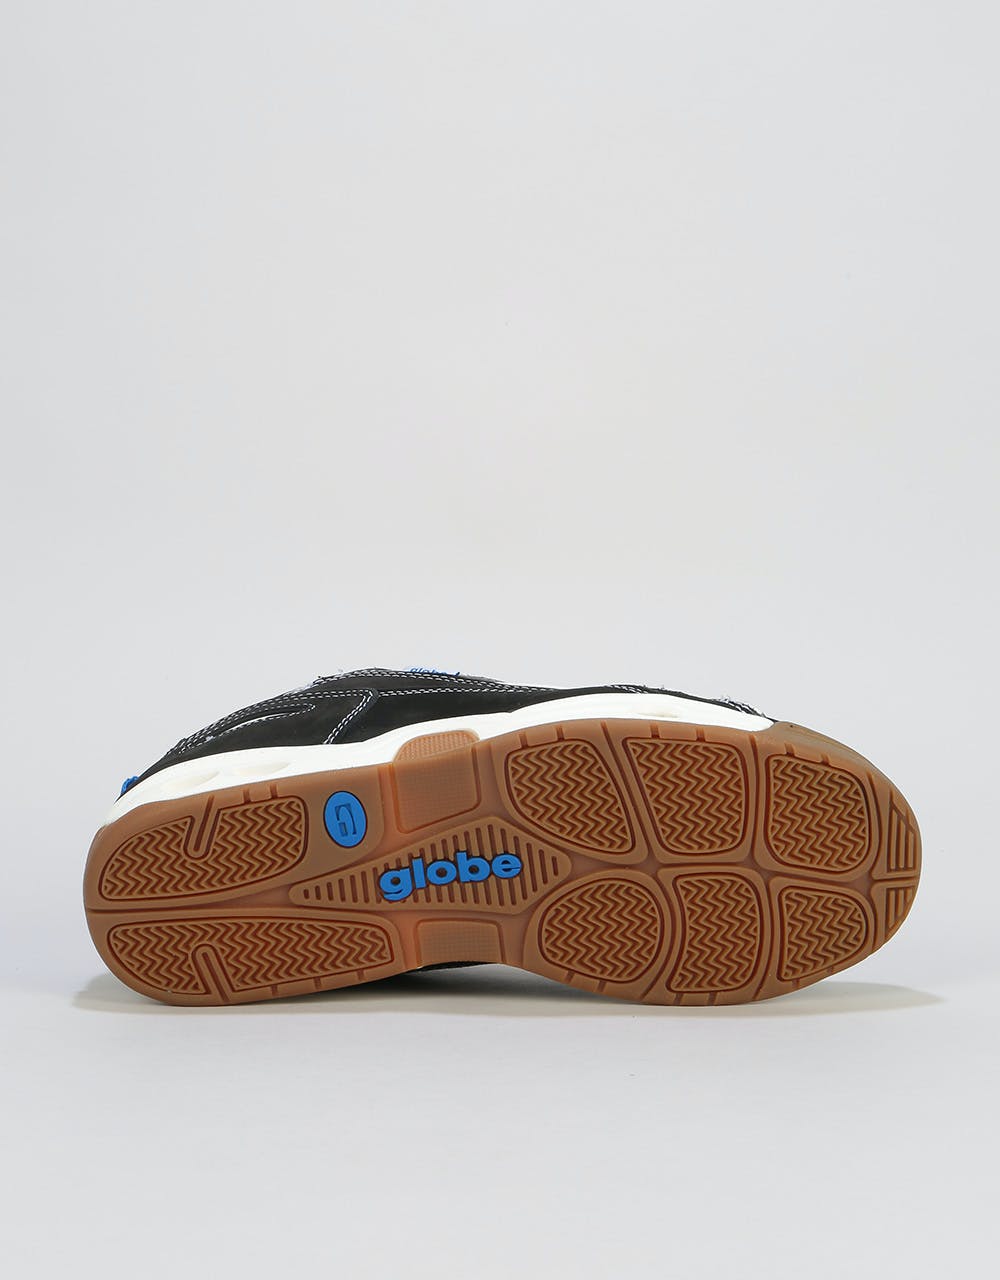 Globe CT IV Classic Skate Shoes - Black/White/Gum